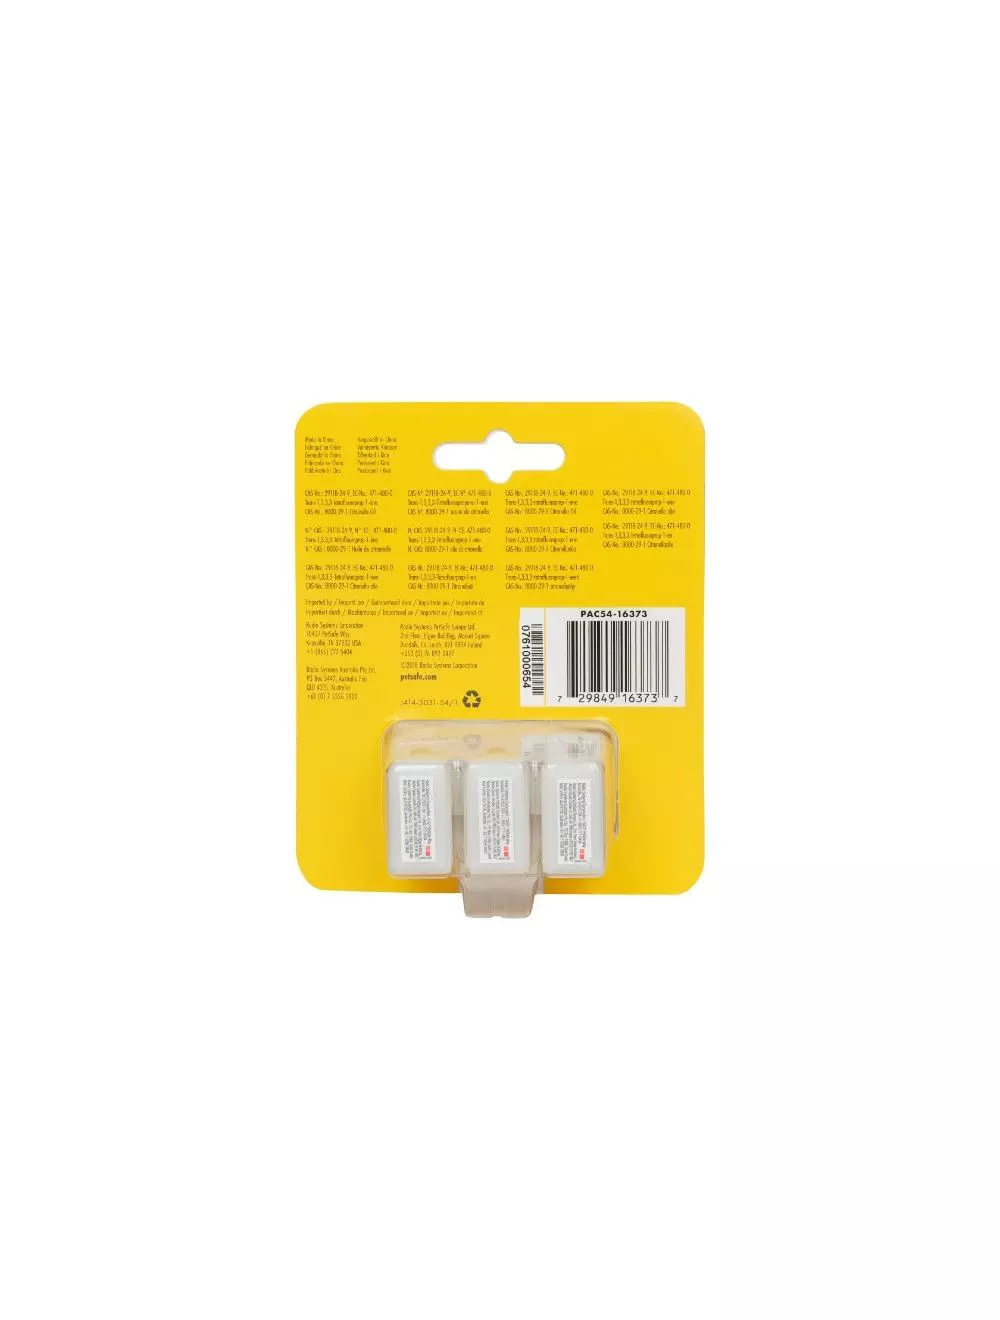 Petsafe Refill Cartridges Citronella 3Pack 72984916373